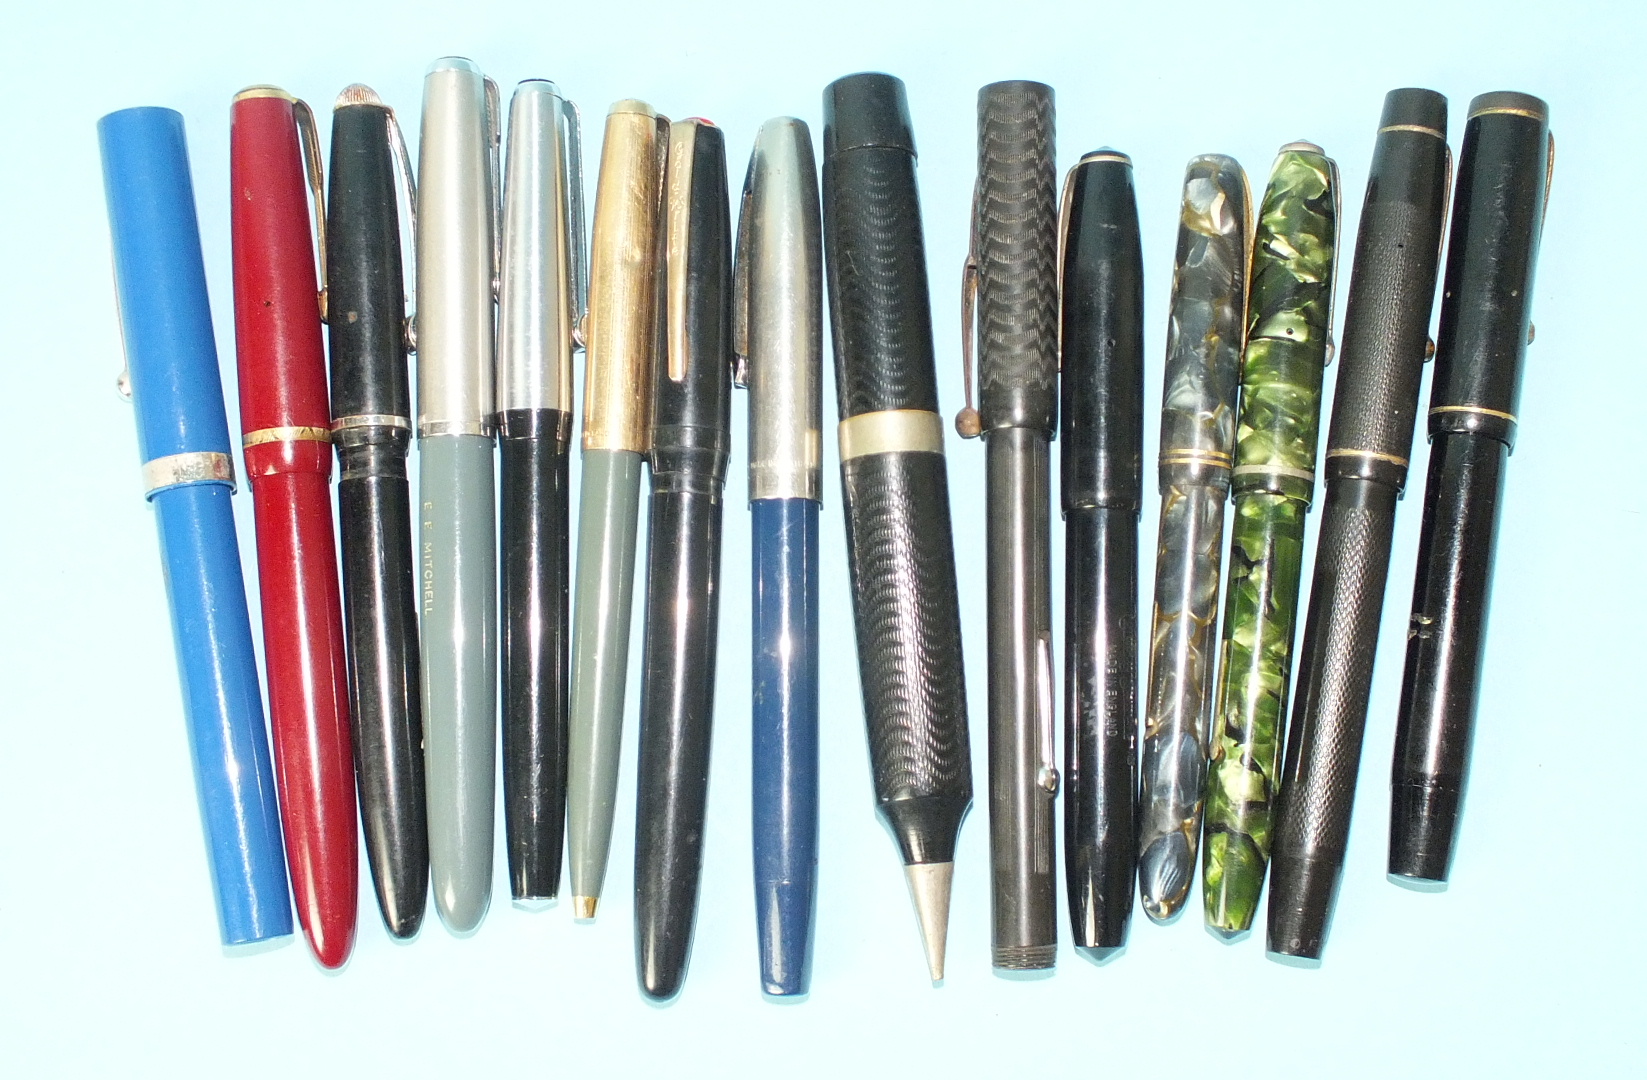 Fifteen pens, including Conway Stewart, (15, 75), Burnham no.54, Onoto the Pen, Platignum and